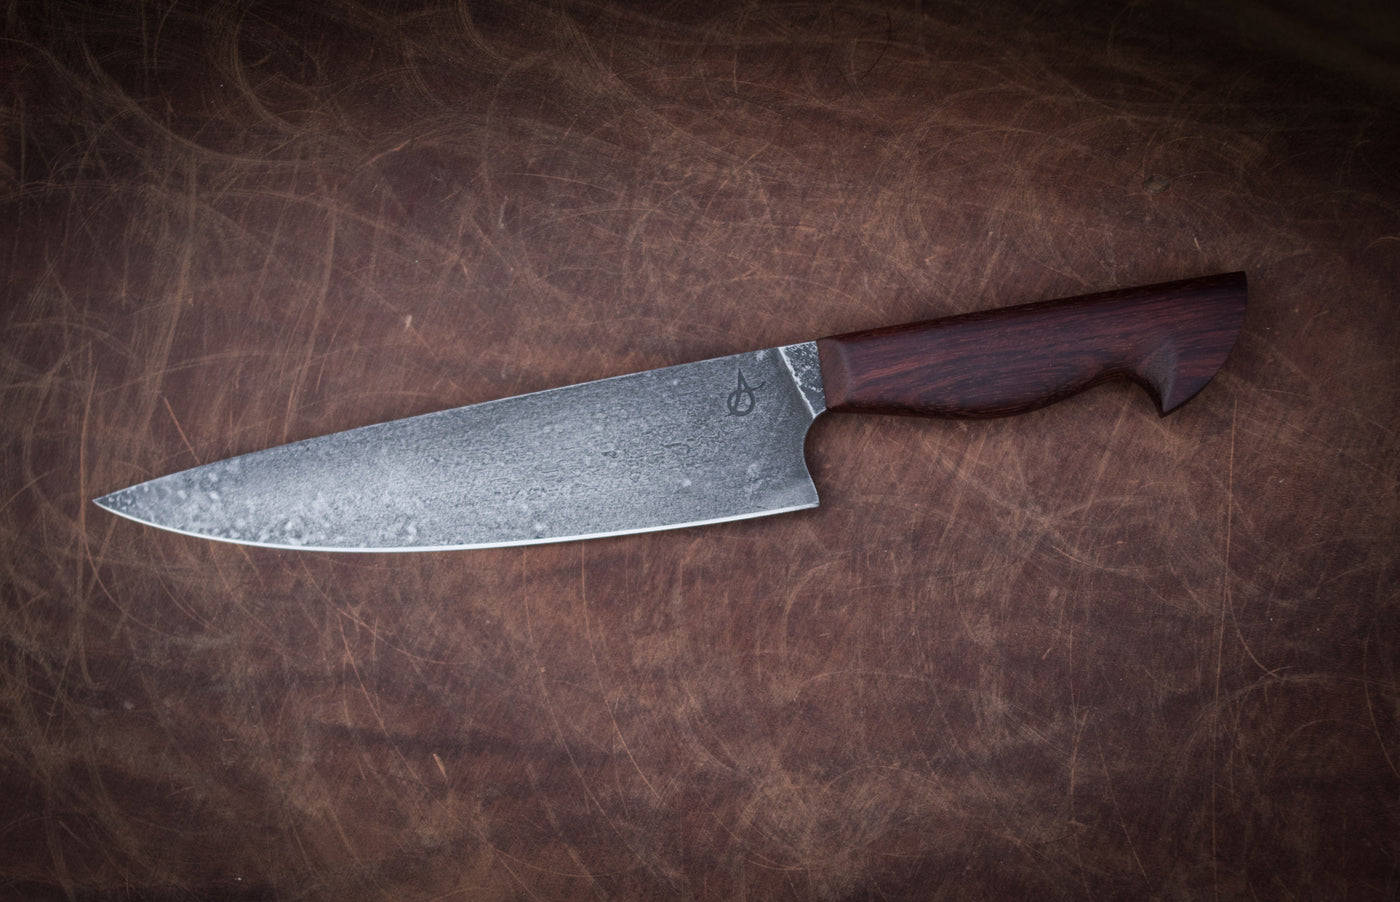 Dark Elegance: Mid-Sized Kitchen Knife